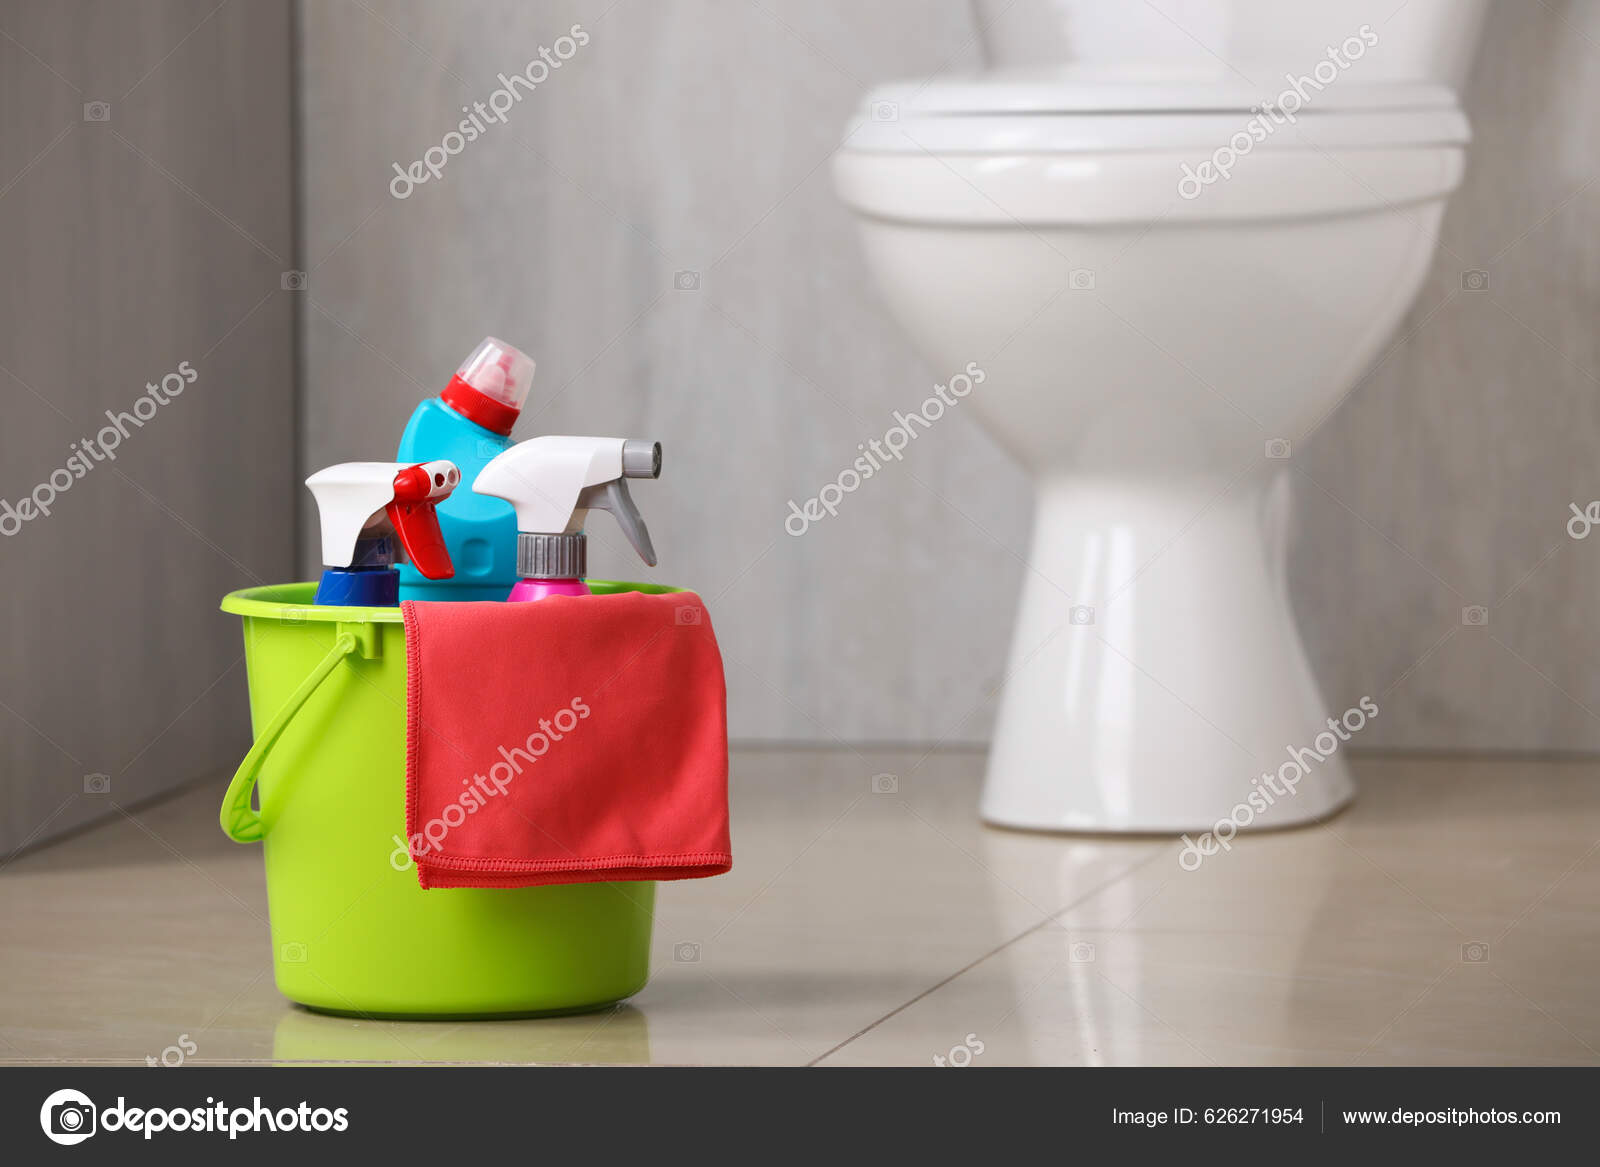 https://st5.depositphotos.com/16122460/62627/i/1600/depositphotos_626271954-stock-photo-bucket-toilet-cleaning-supplies-floor.jpg